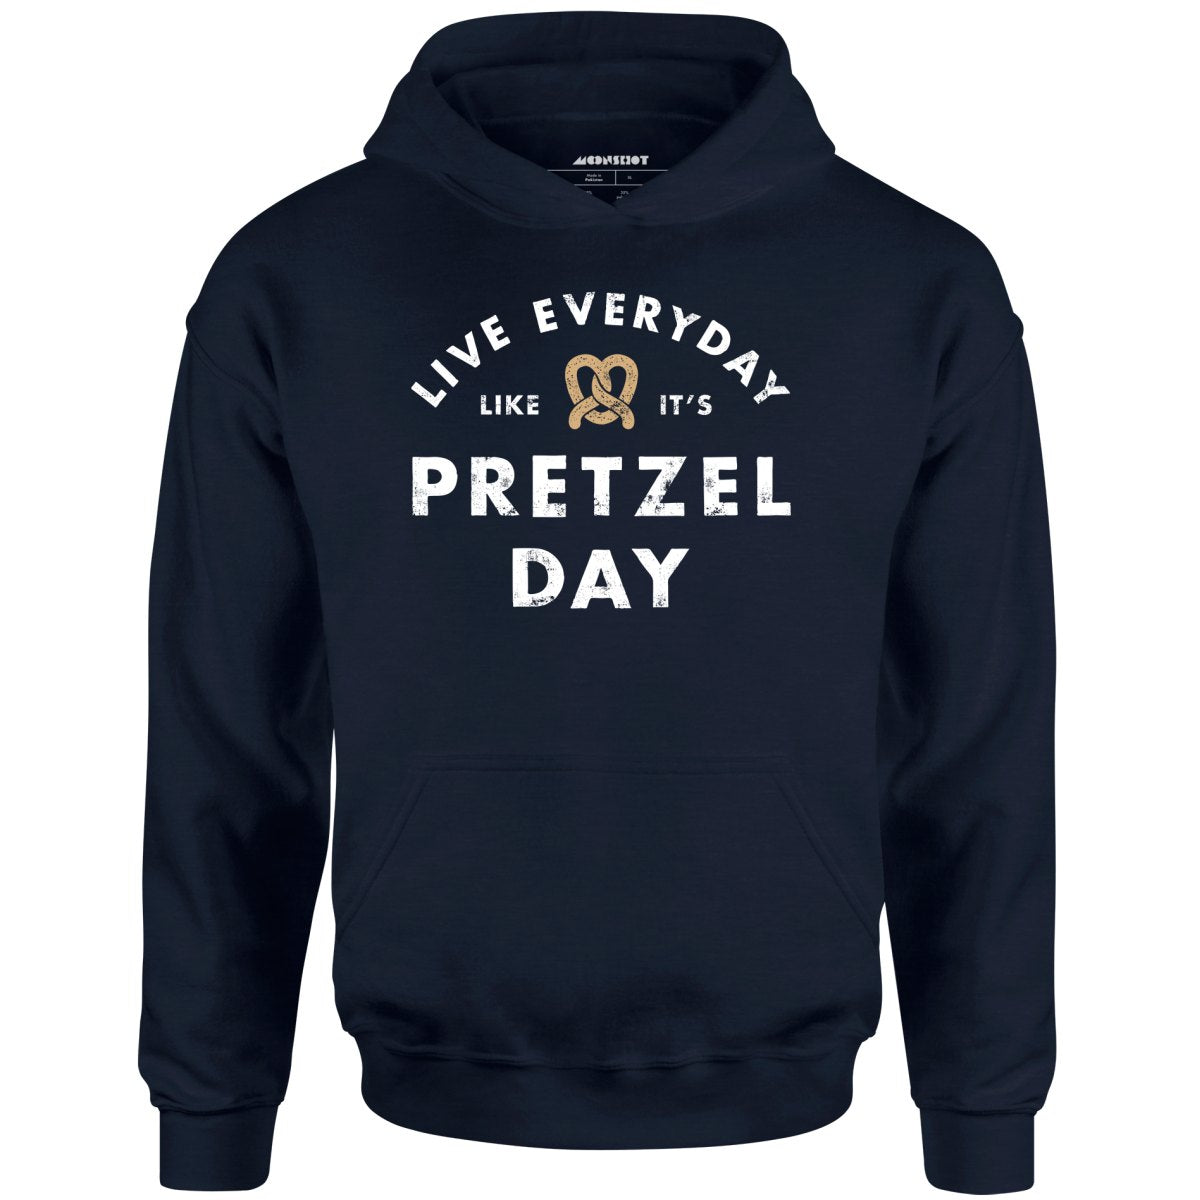 Live Everyday Like It's Pretzel Day - Unisex Hoodie